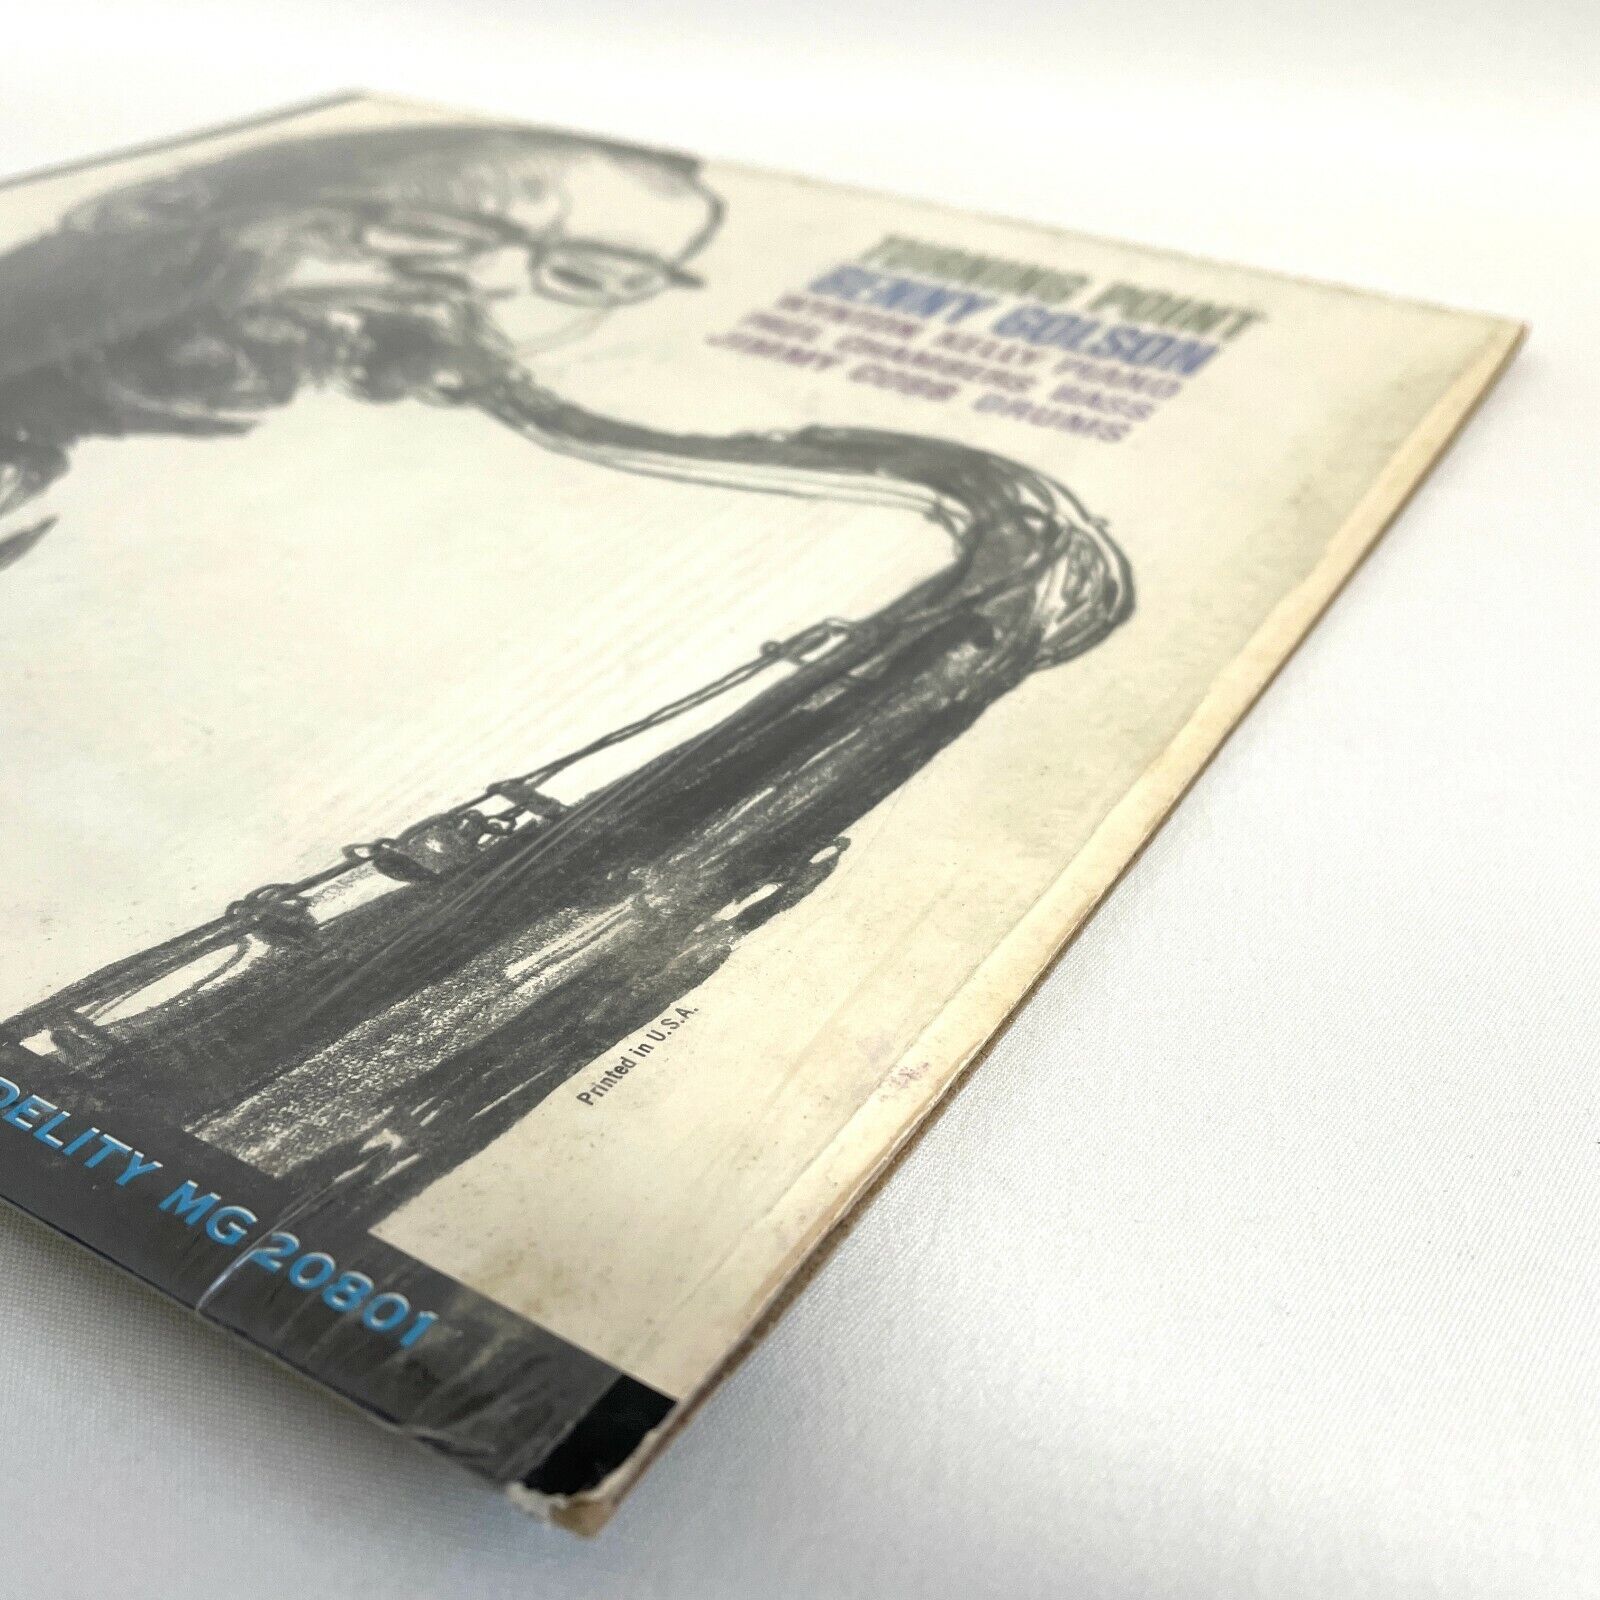 Benny Golson / Turning Point LP Mercury-